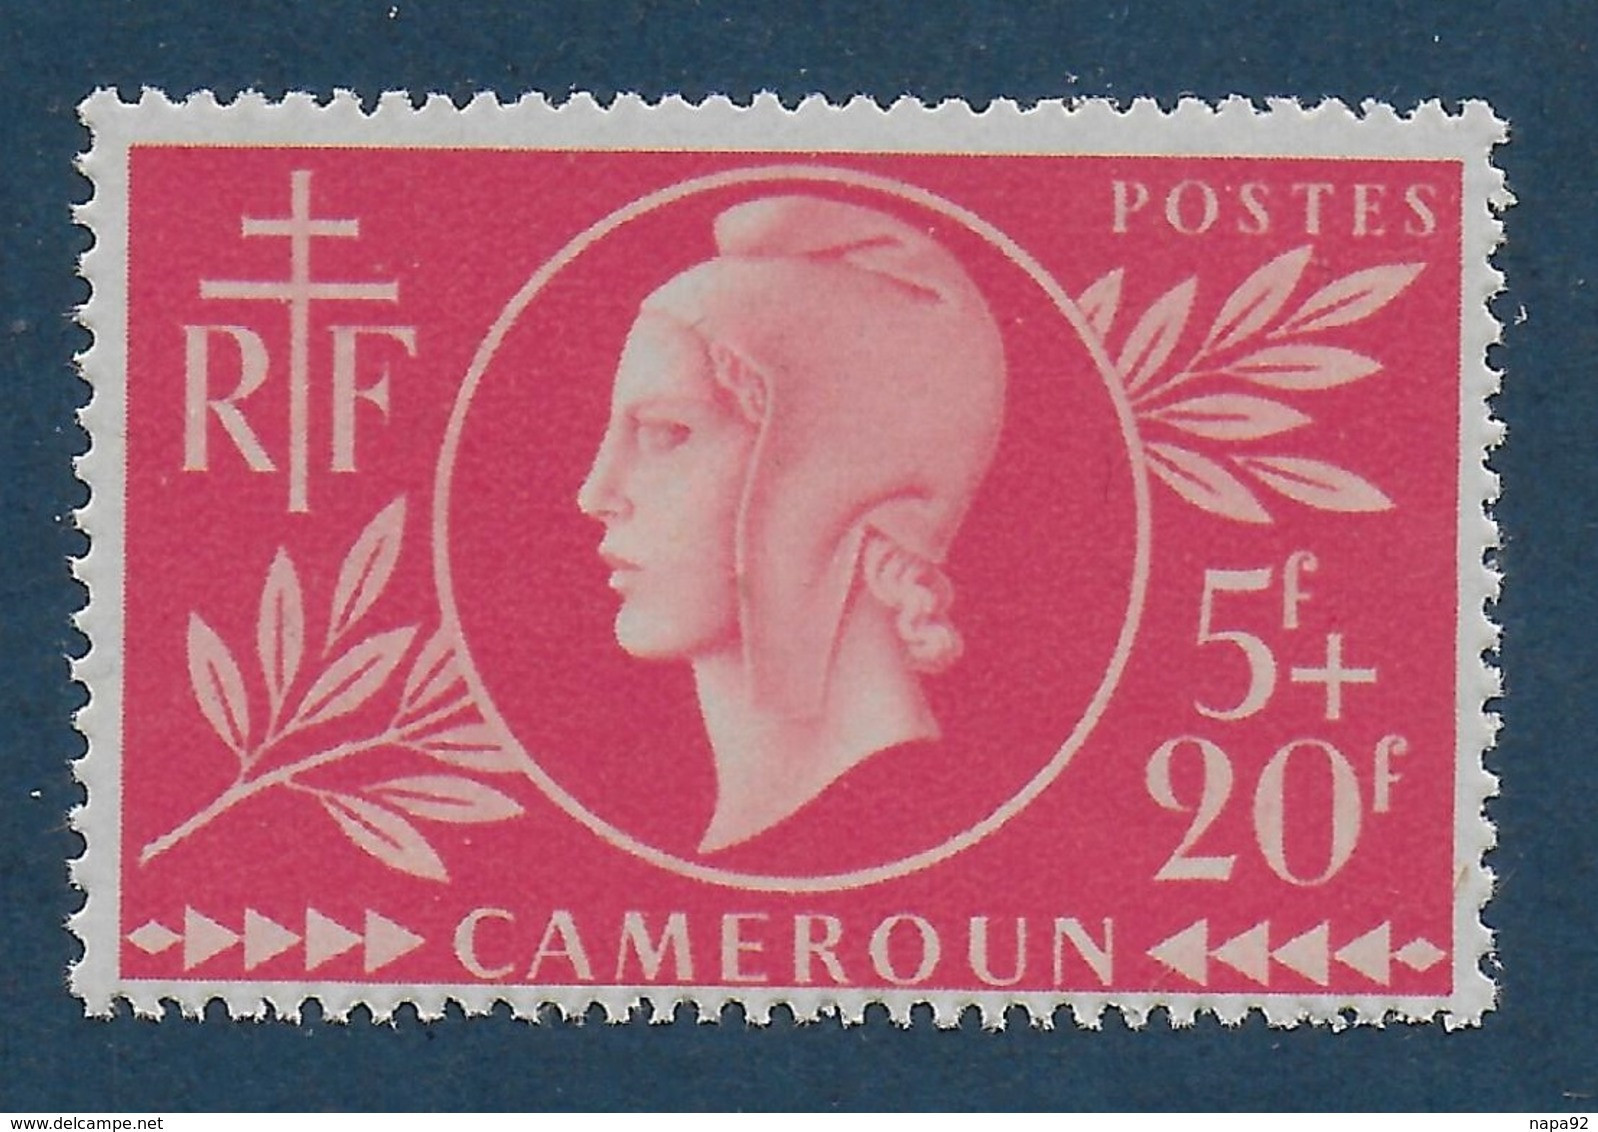 CAMEROUN 1944 YT 265** SANS TRACE DE CHARNIERE - Unused Stamps